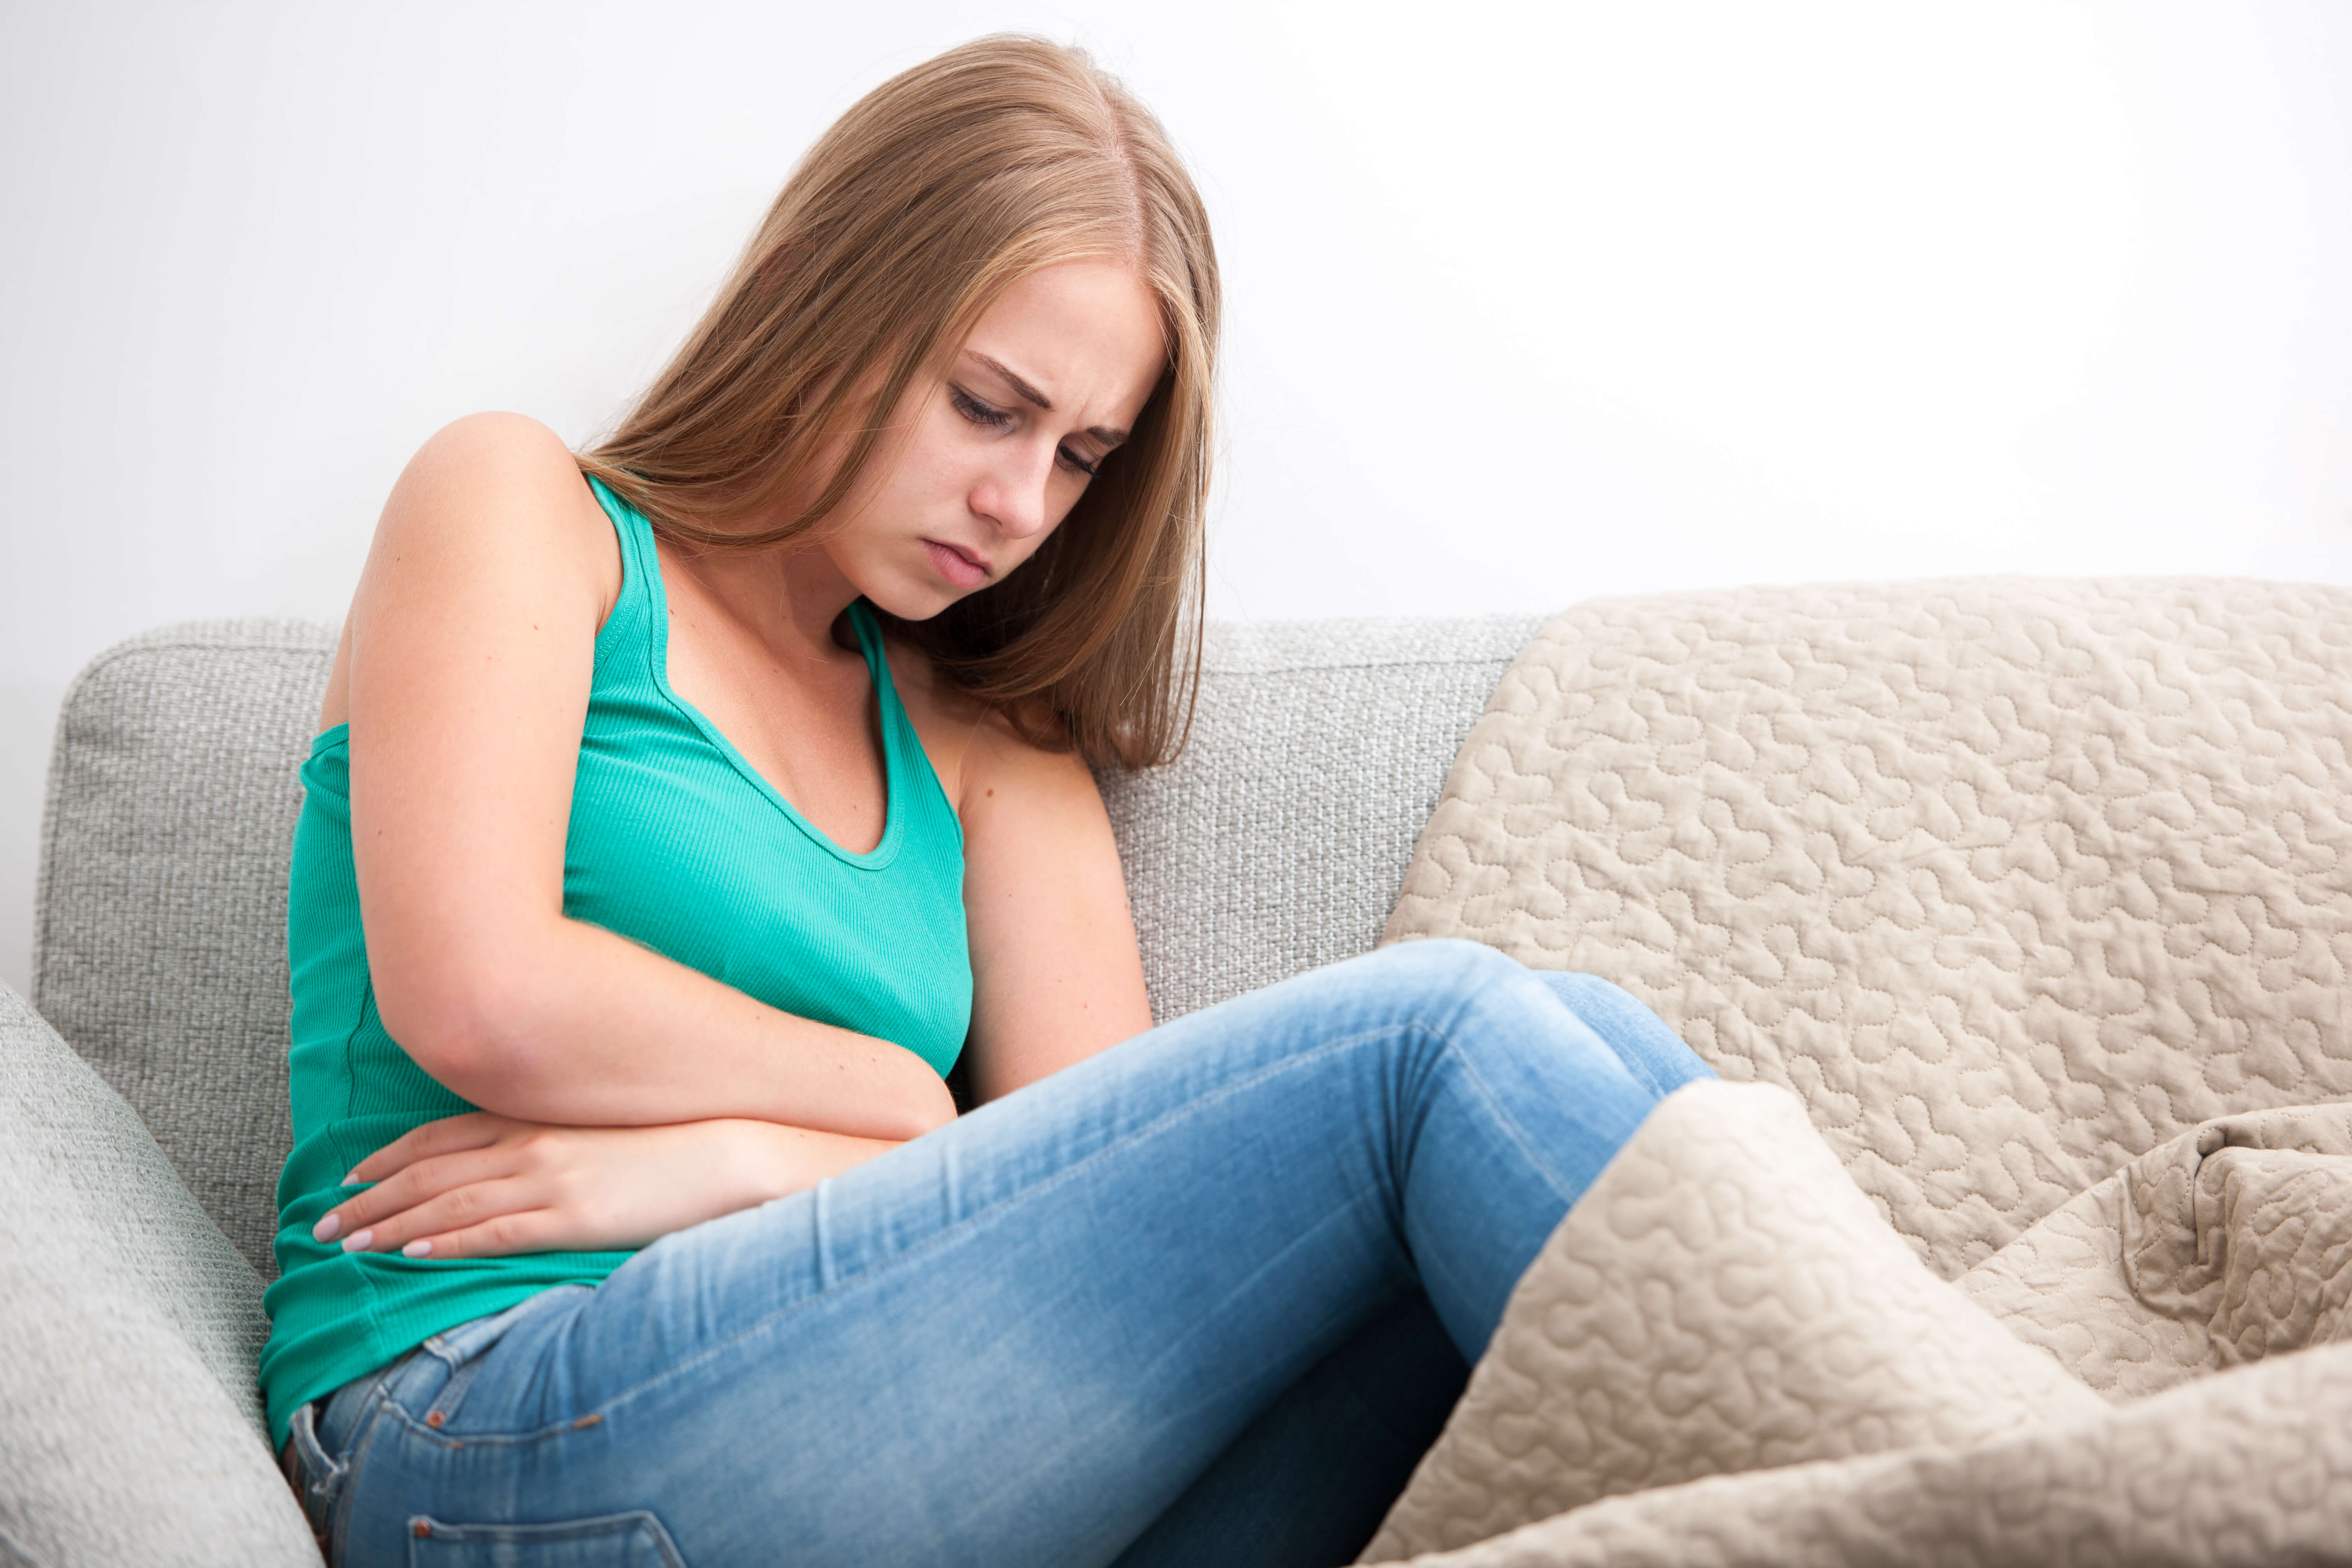 Relief of menstrual cramps through orgasm